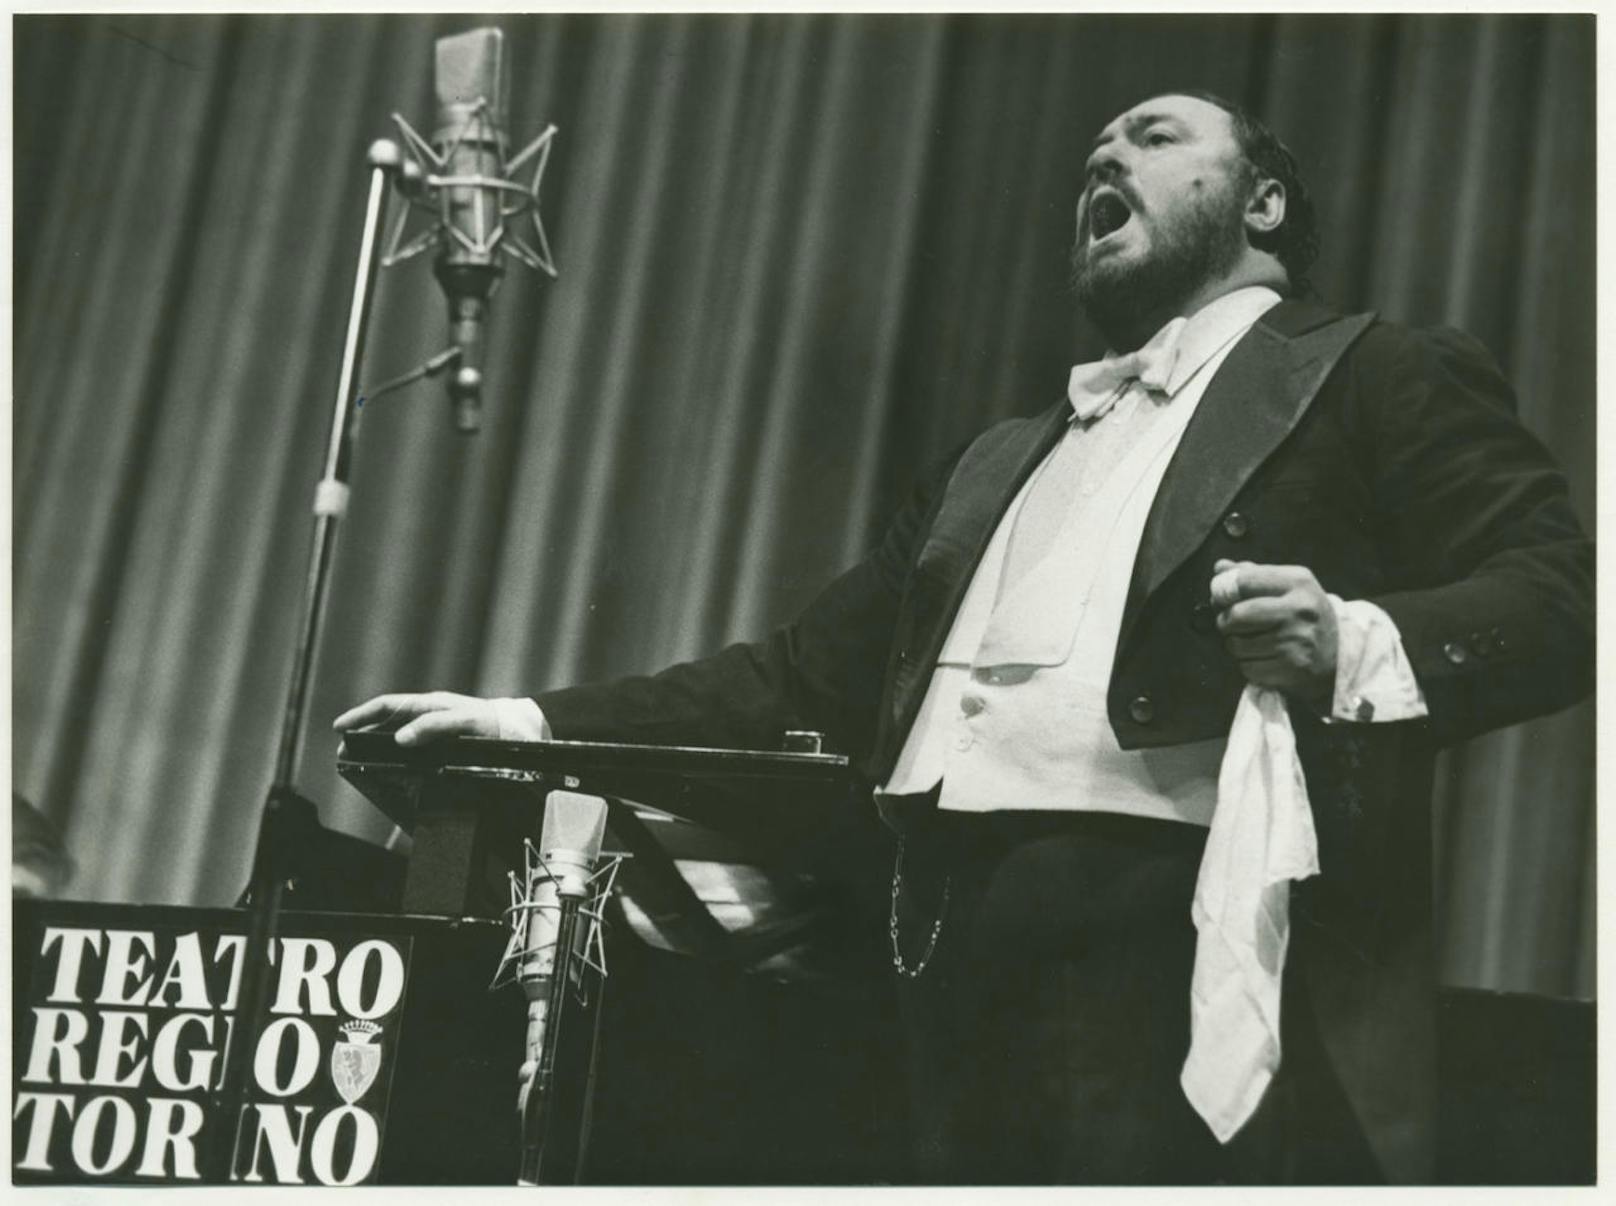 Szenenbild zum Film "Pavarotti" 